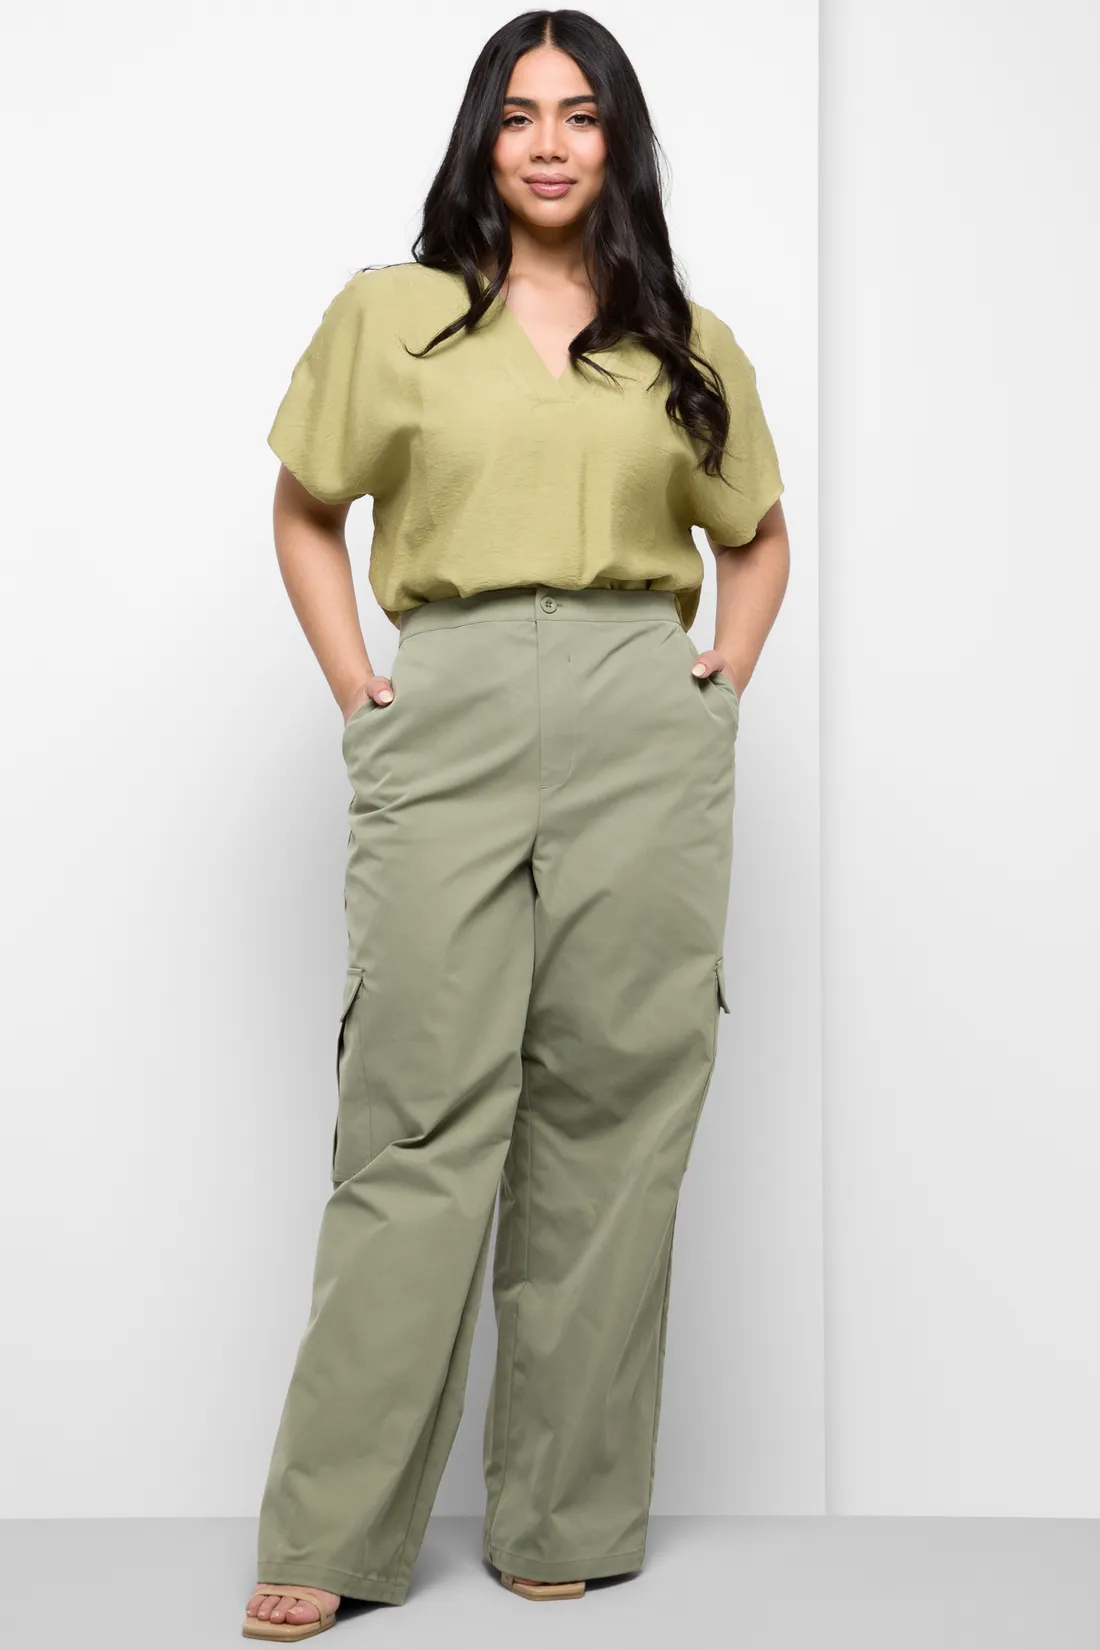 Popover short sleeve top green - Women's Short Sleeve Tops | Ackermans